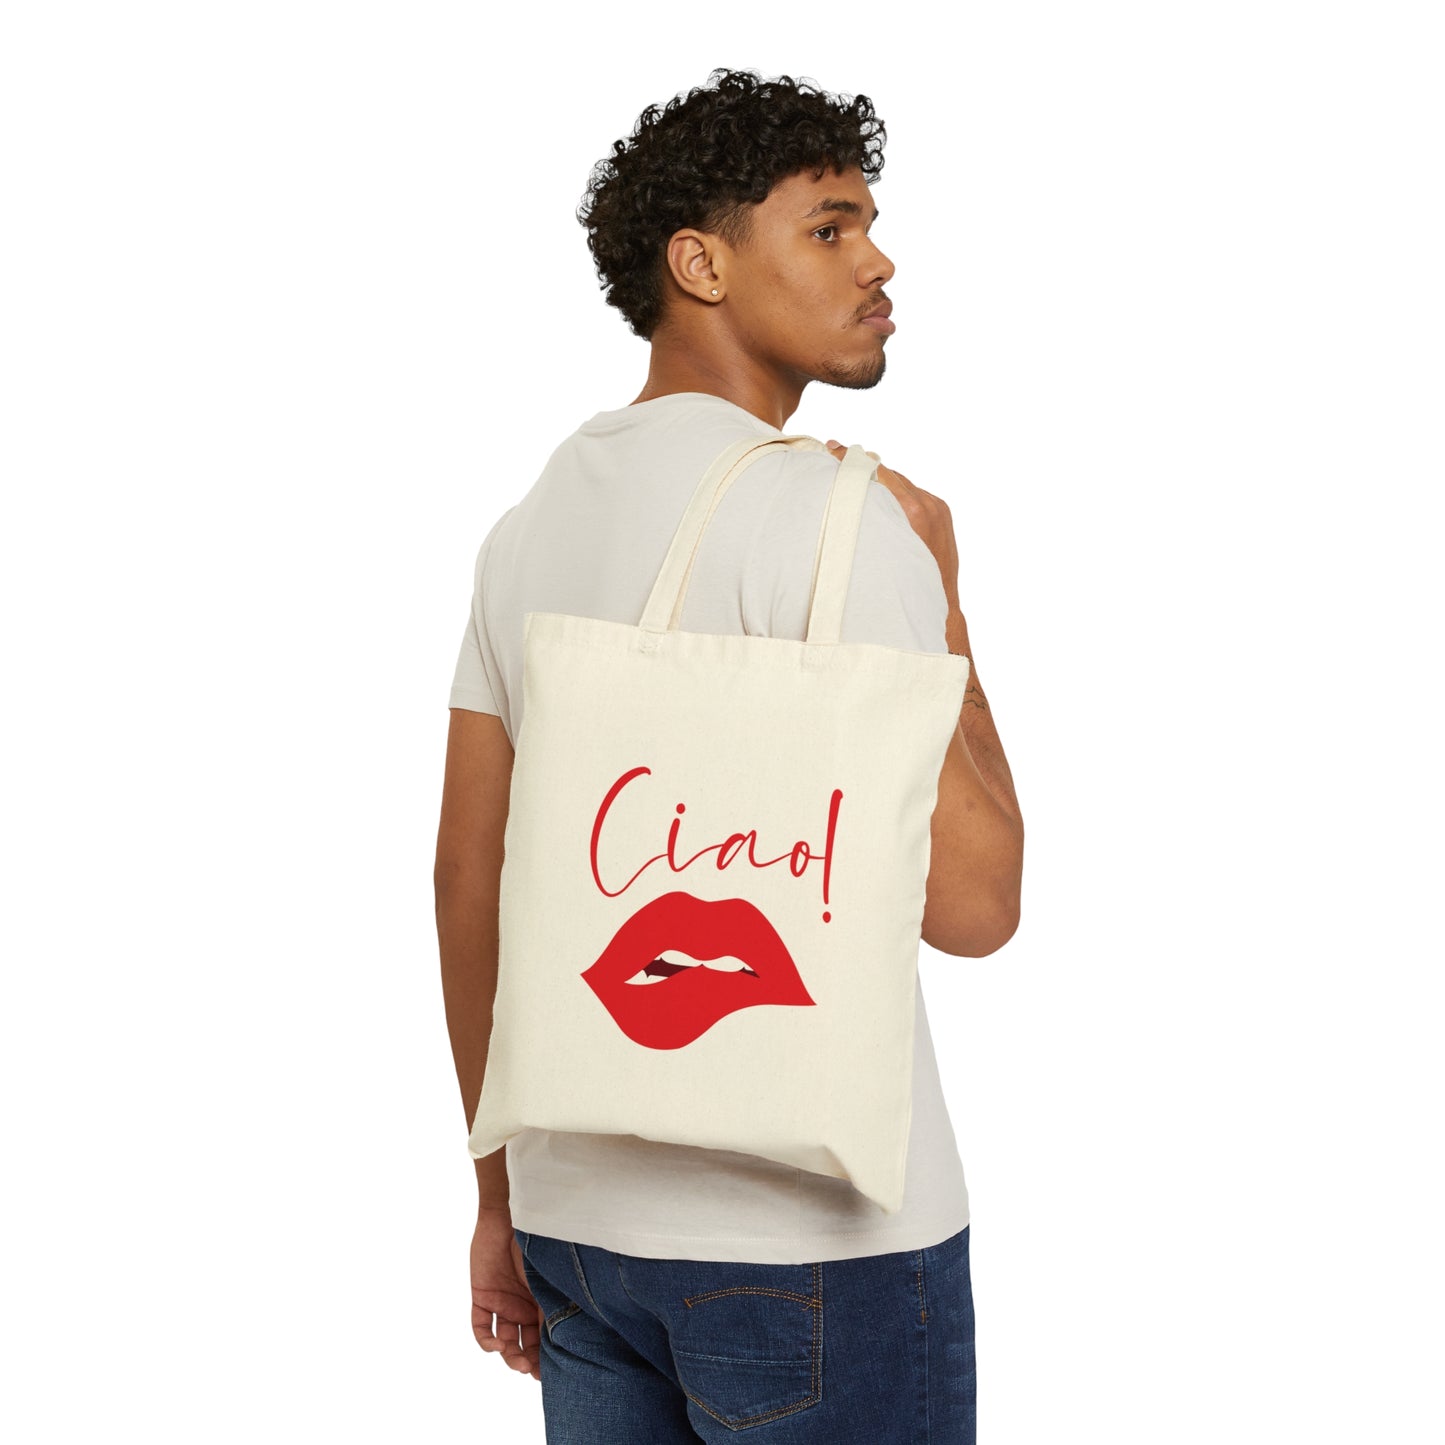 Ciao Hello Goodbye Red Lips Lipstick Lipstick Canvas Shopping Cotton Tote Bag